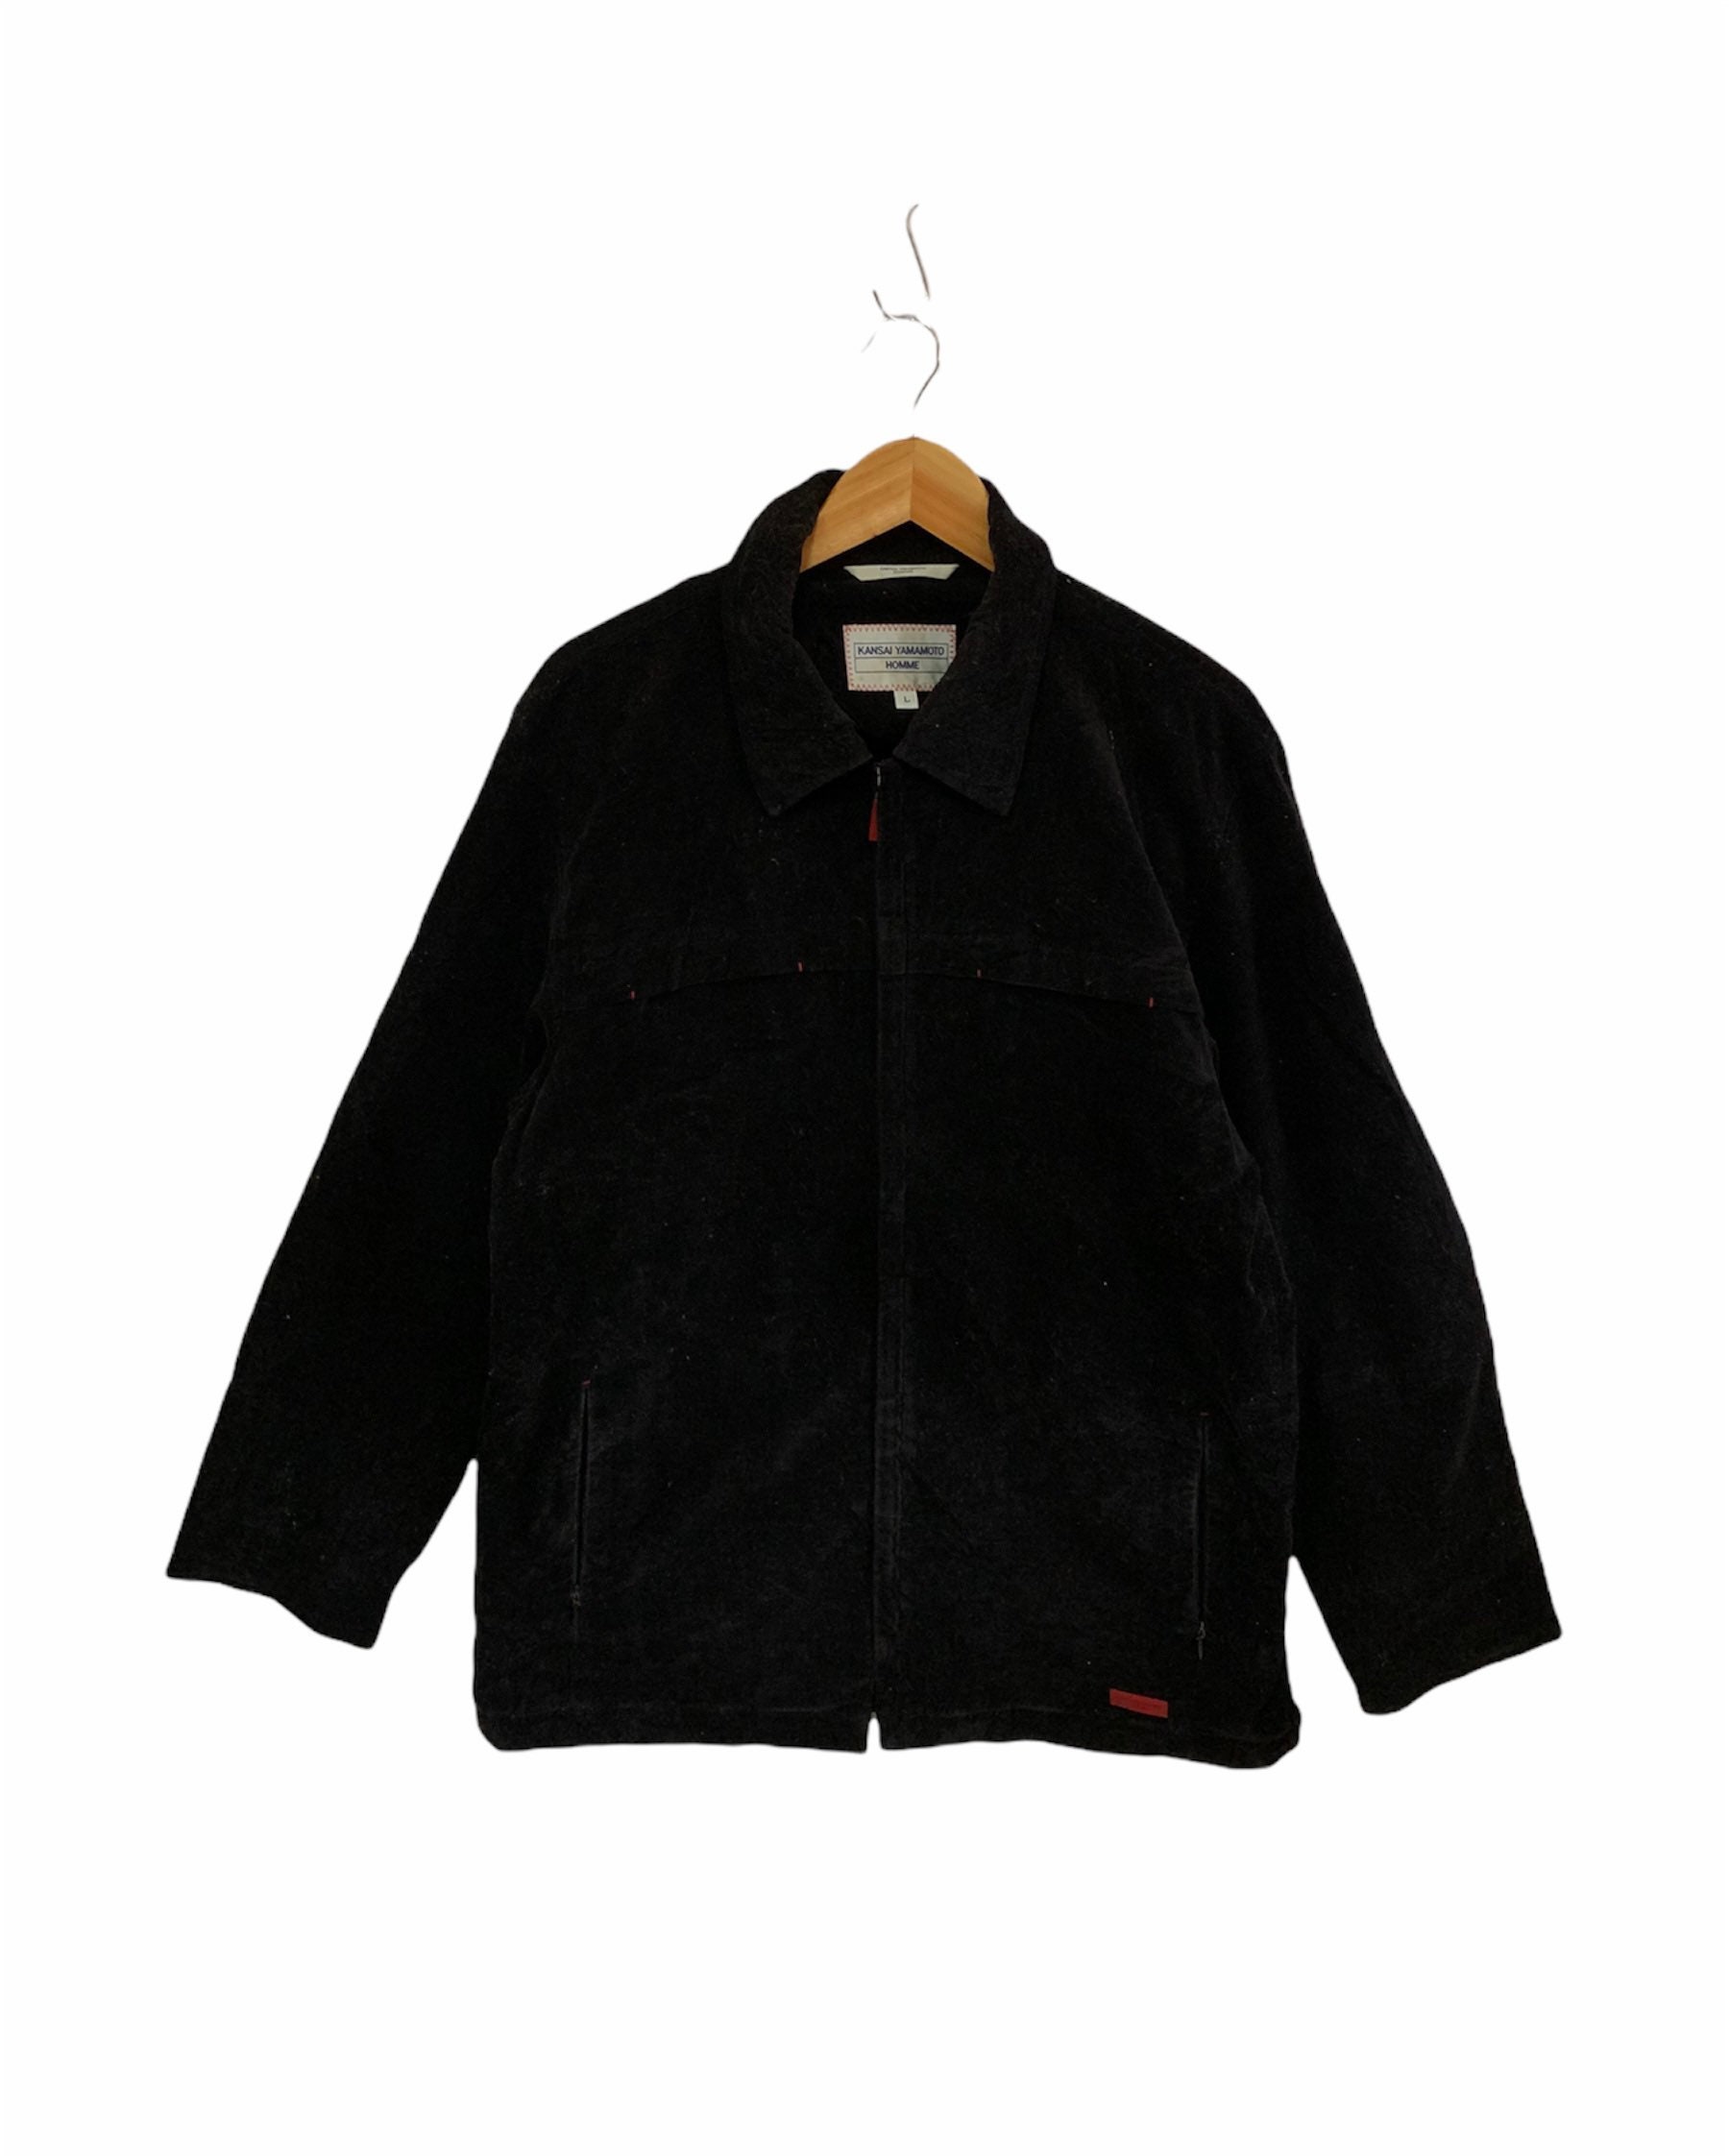 Vintage 90s kansai yamamoto homme velvet jacket full zip chore | Etsy